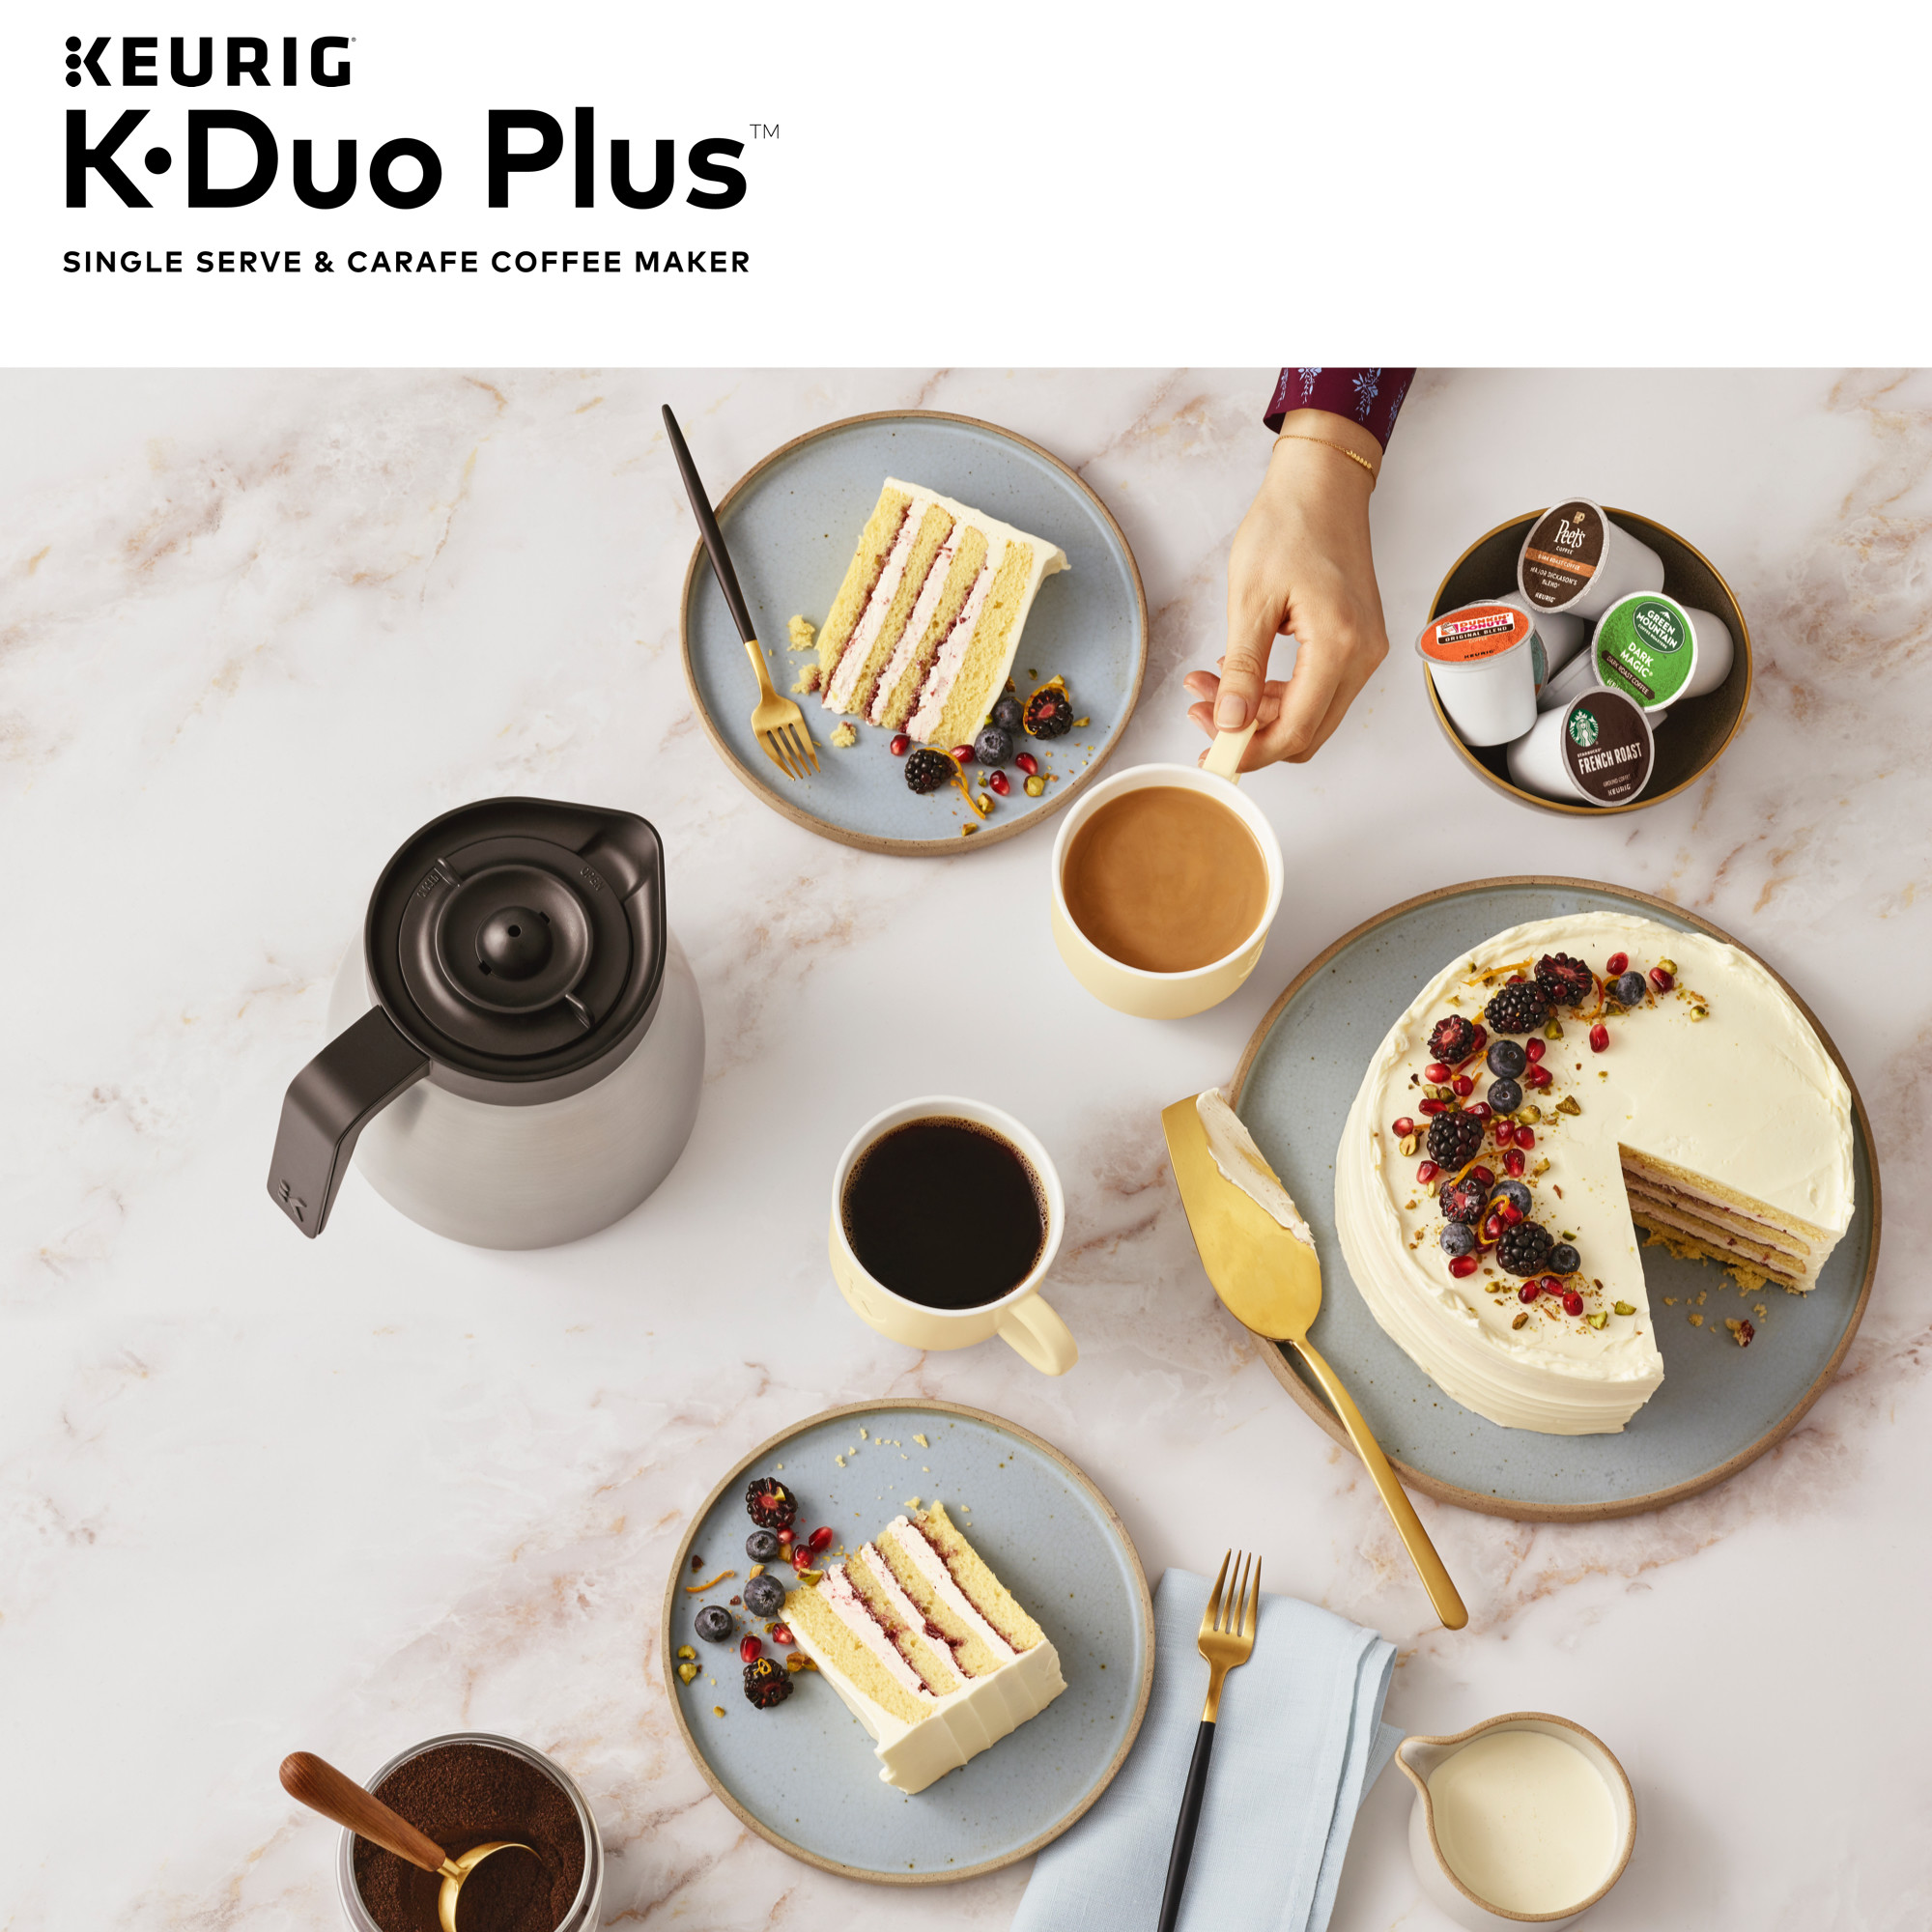 Keurig K-Duo Plus Single Serve & Carafe Coffee Maker - image 13 of 24